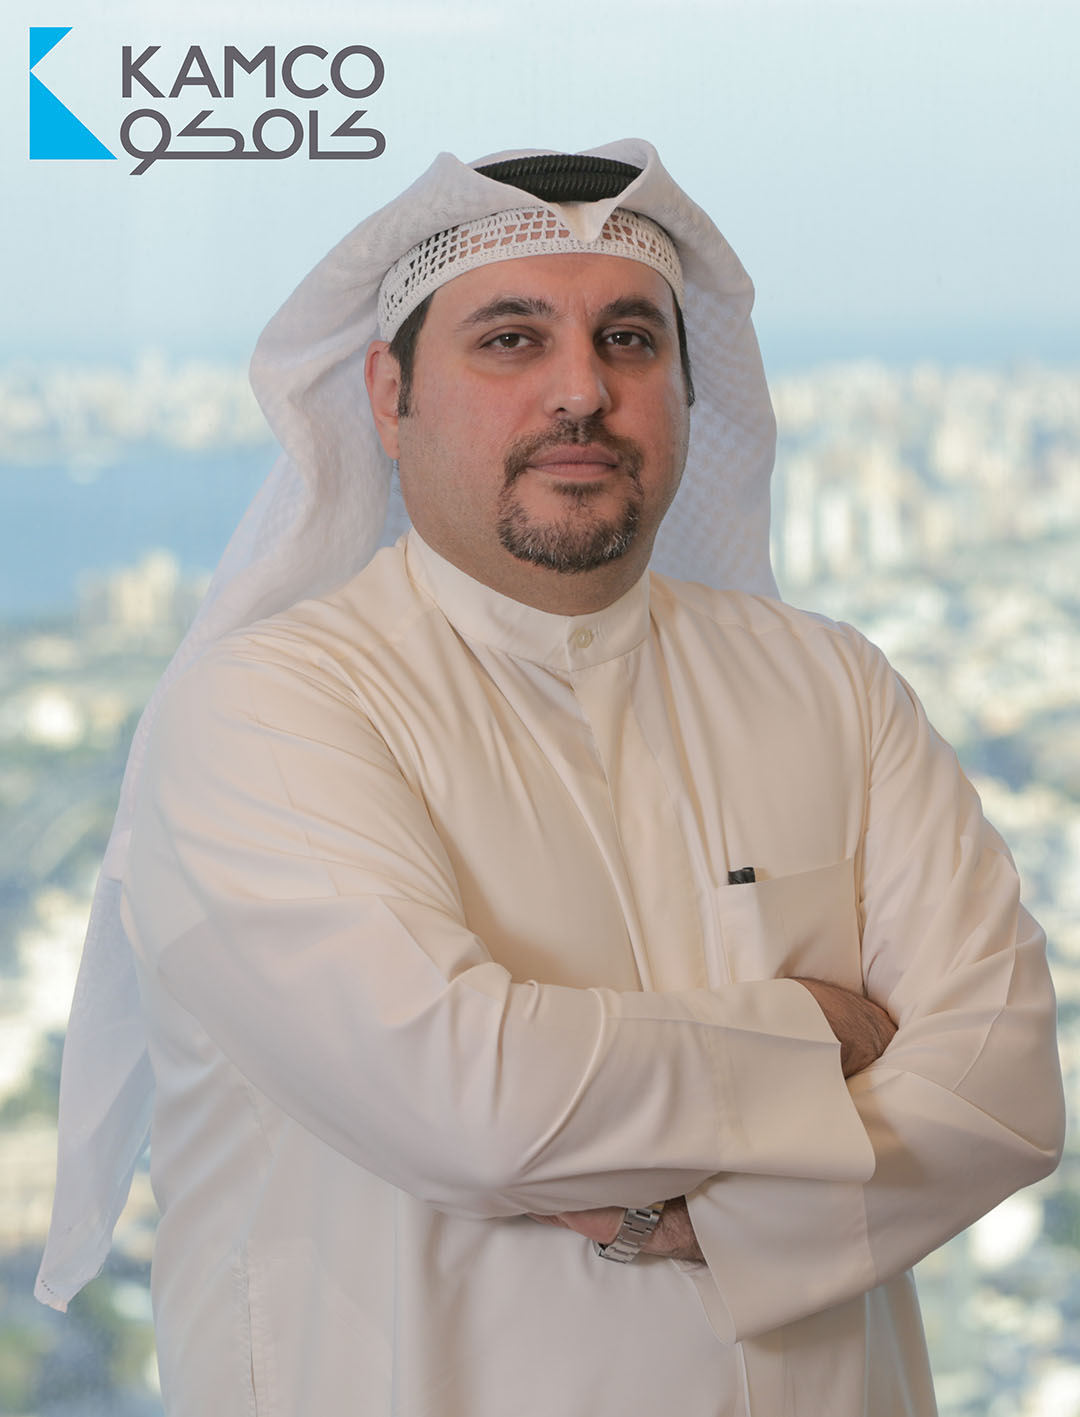 KAMCO's CEO, Faisal Mansour Sarkhou